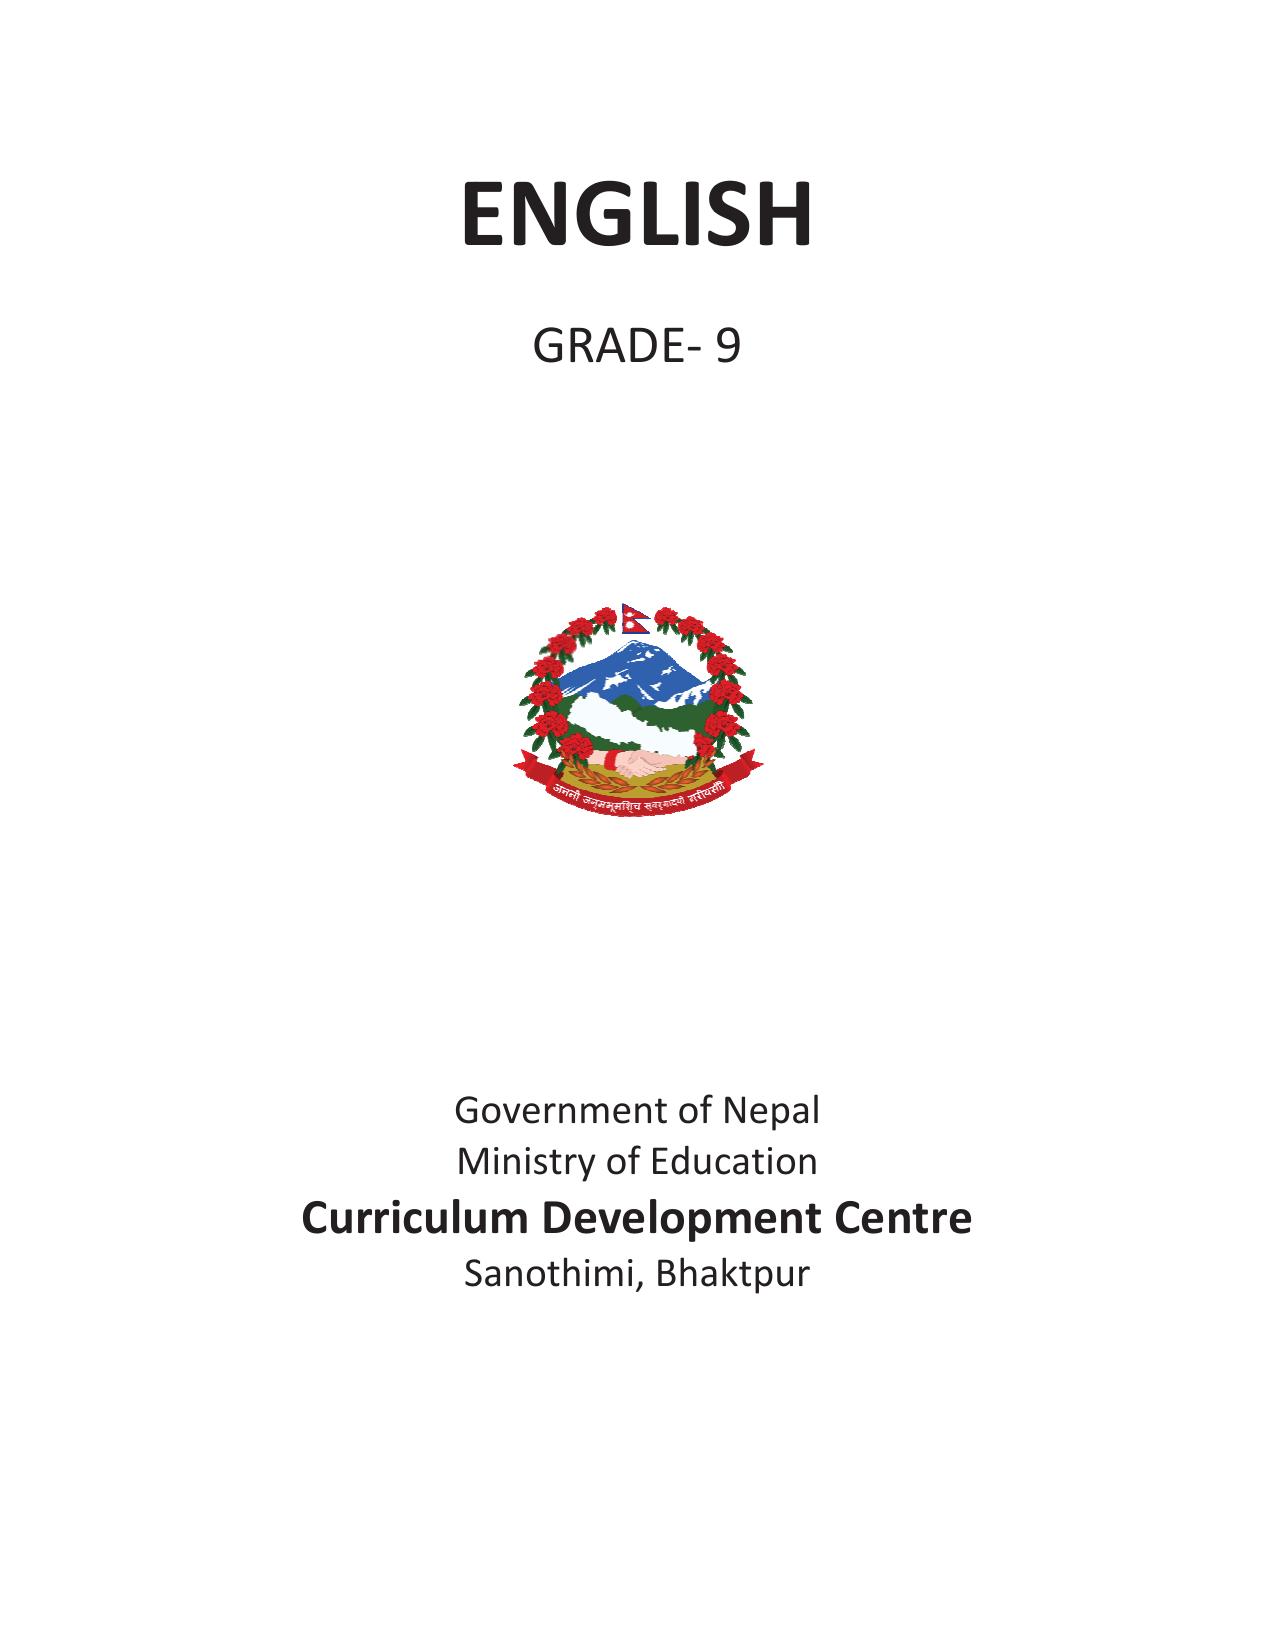 CDC 2017 - English Grade 9